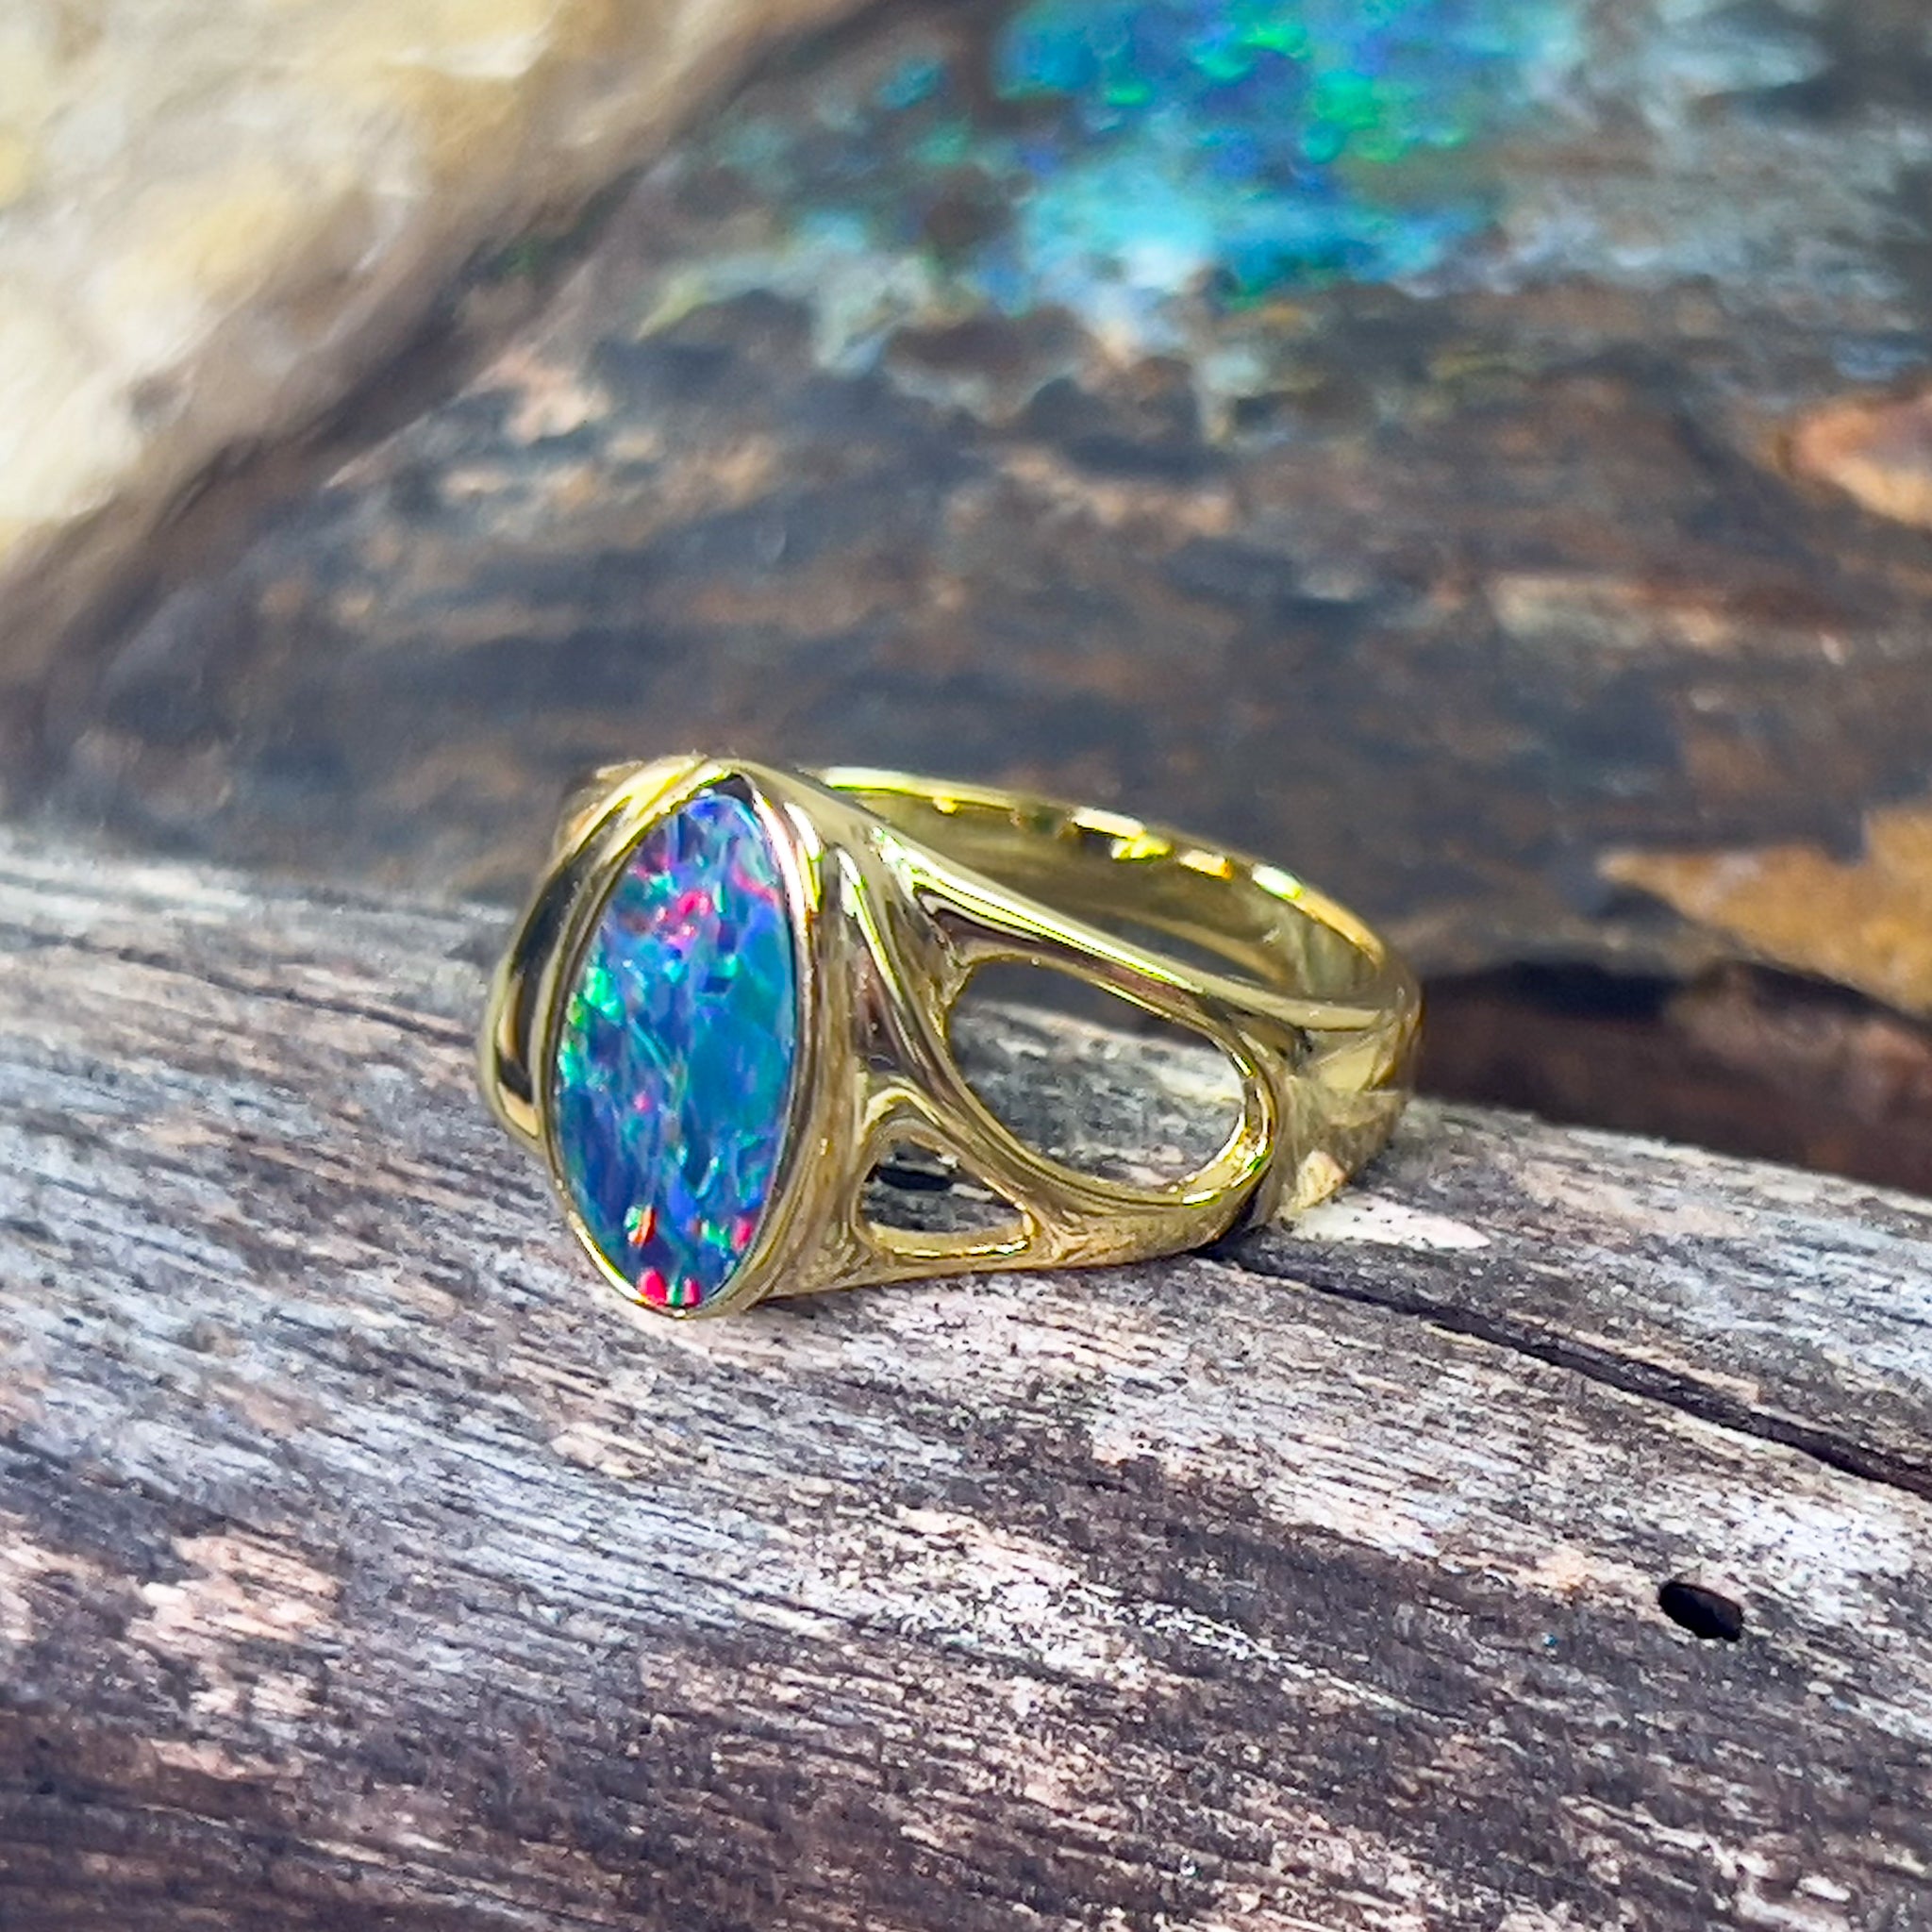 Gold plated Sterling Silver shaped cut out pattern opal doublet ring - Masterpiece Jewellery Opal & Gems Sydney Australia | Online Shop